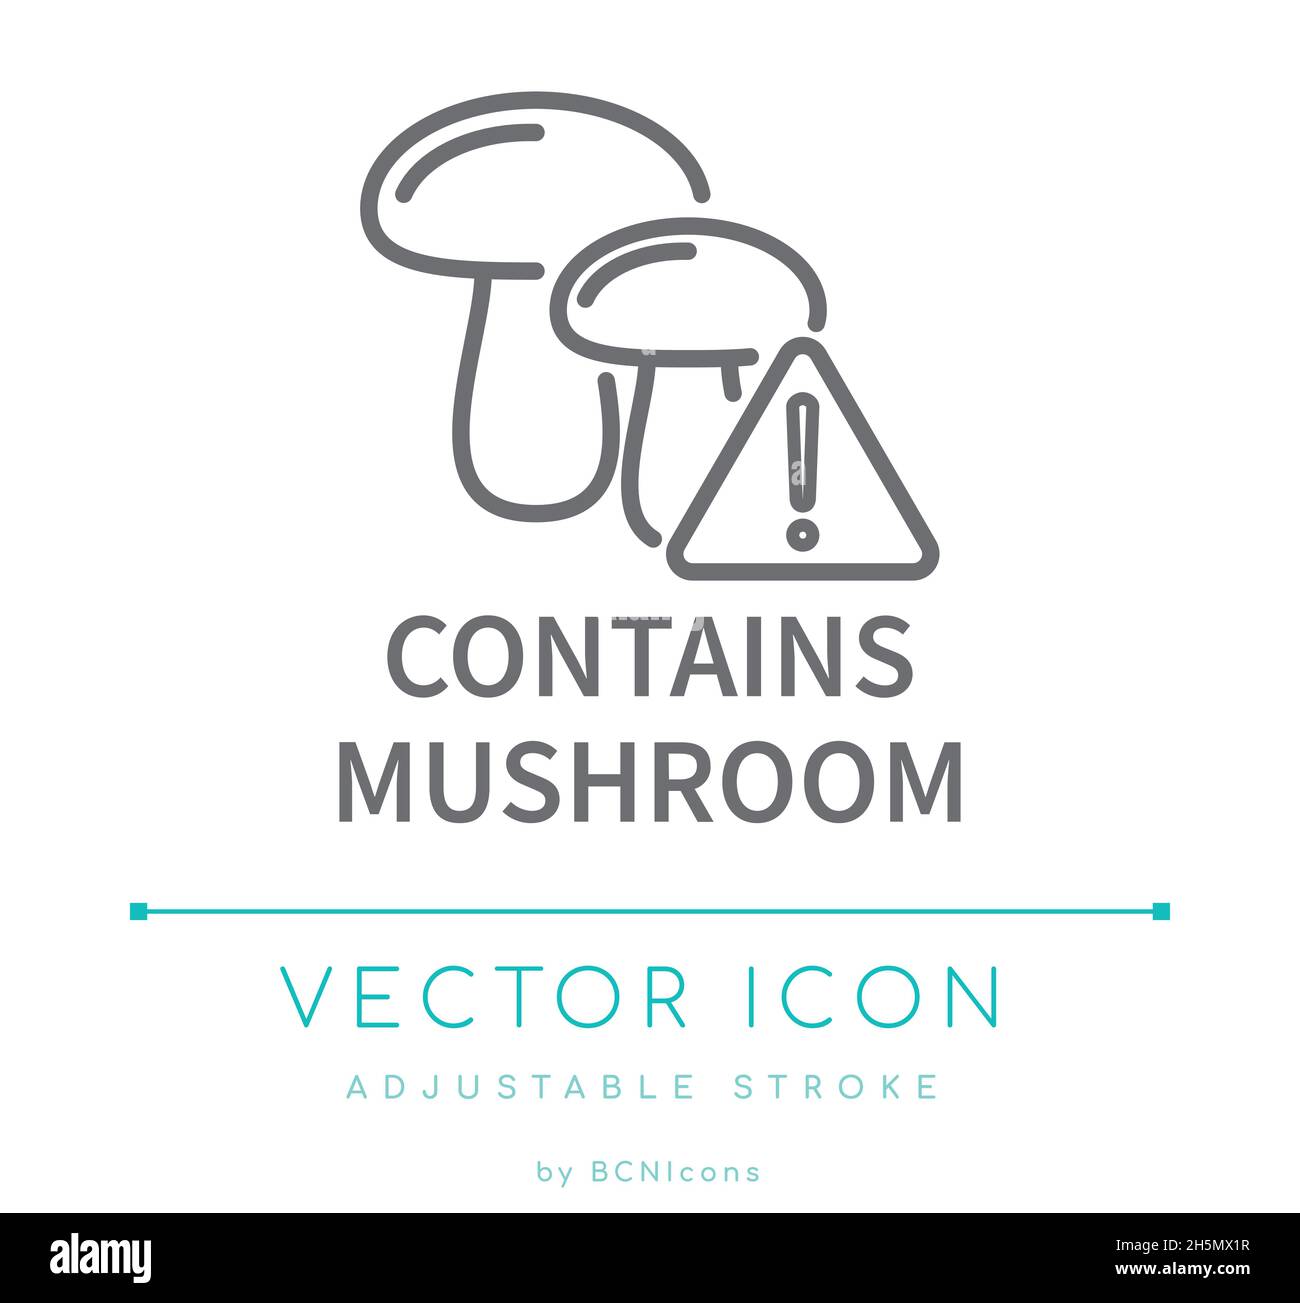 Contains Mushroom Food Allergen Warning Vector Line Icon Stock Vector